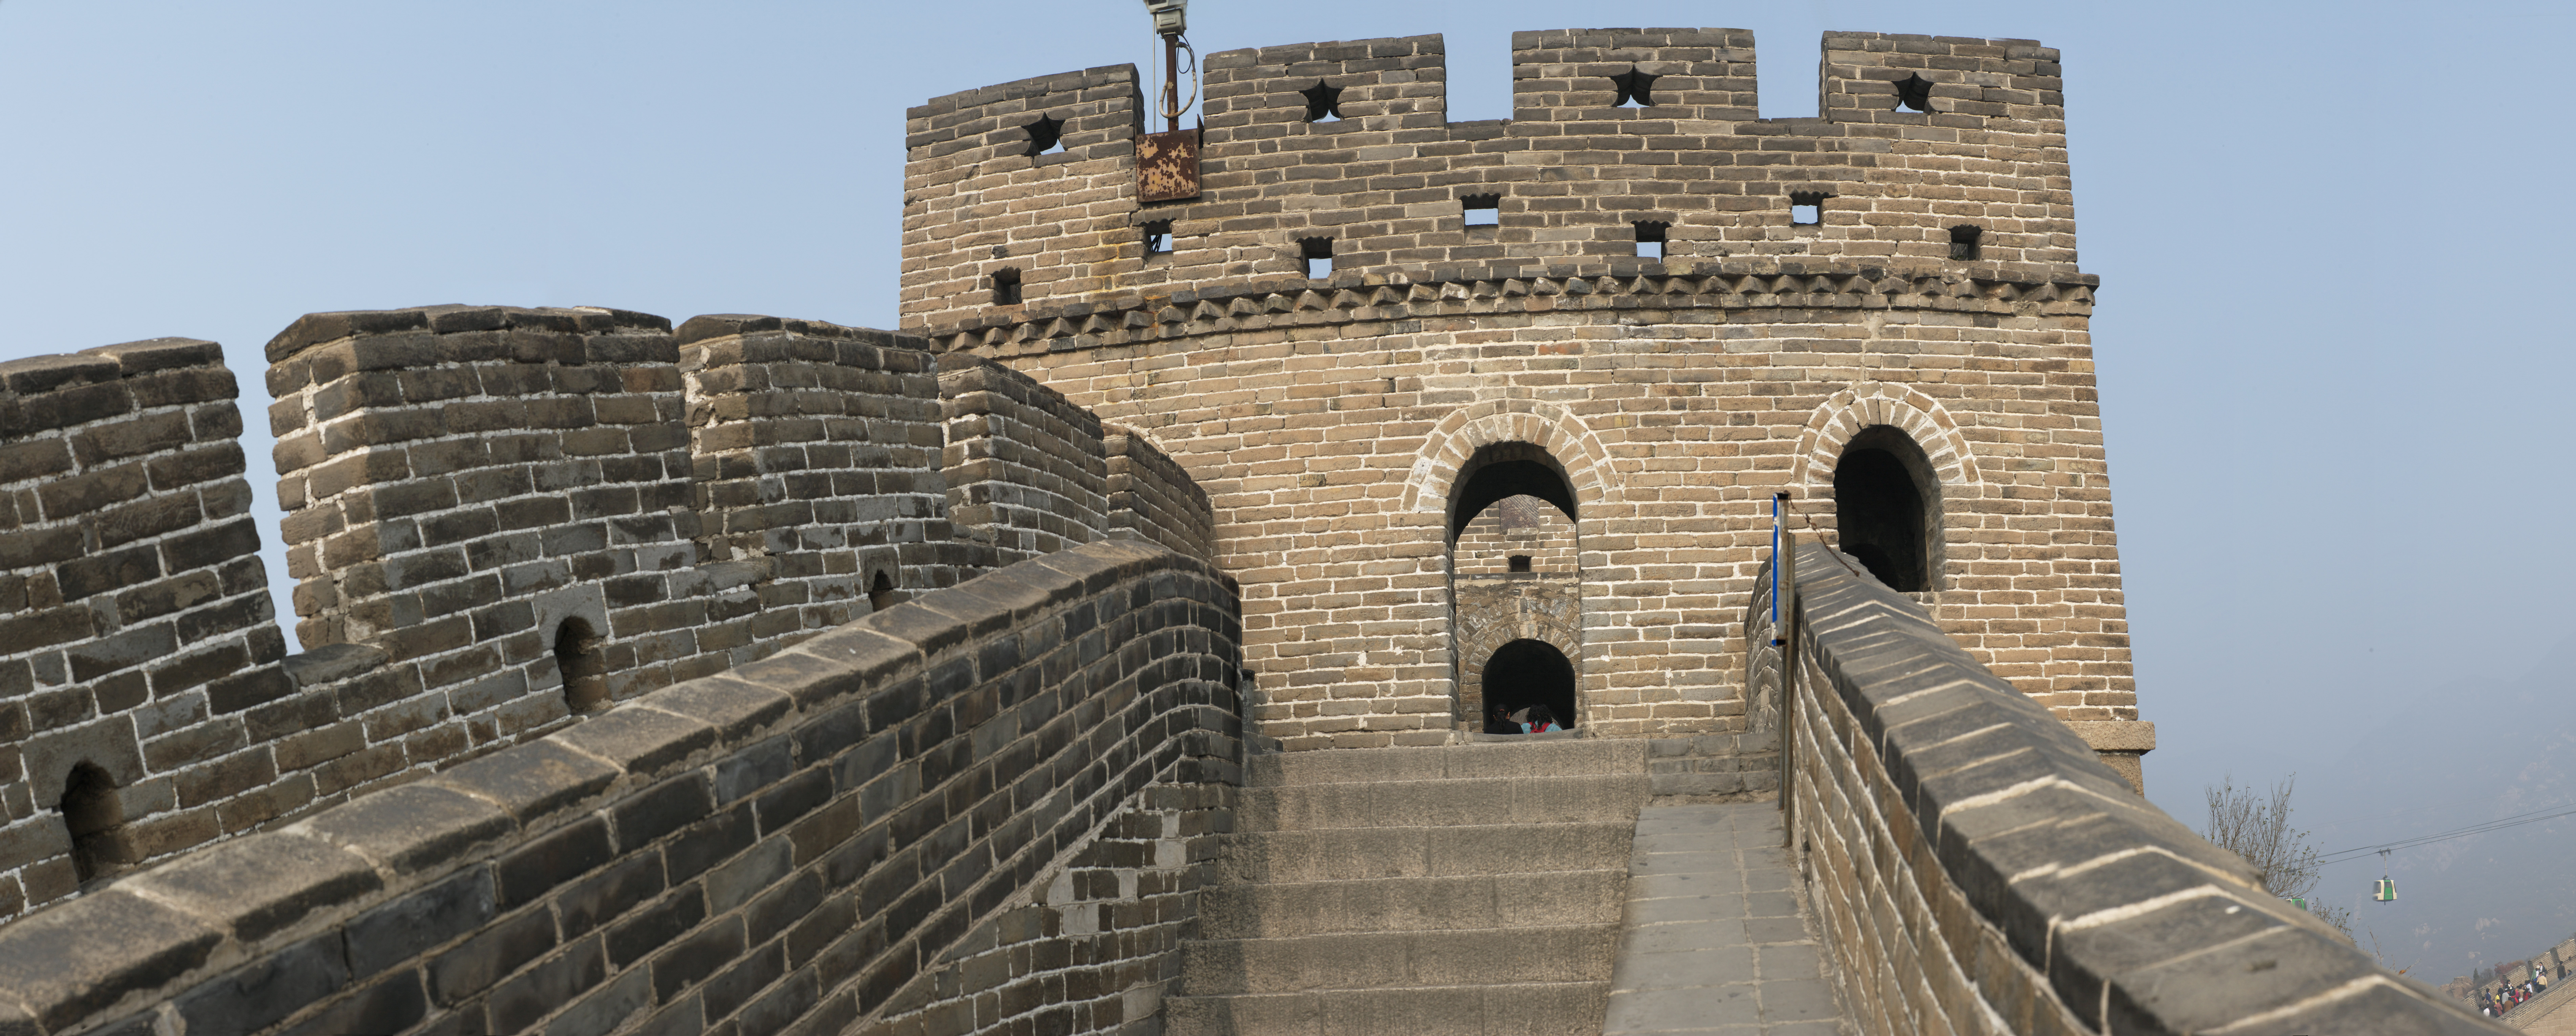 foto,tela,gratis,paisaje,fotografa,idea,Gran Muralla Panorama, Paredes, Castillo de Lou, Xiongnu, Emperor Guangwu de Han